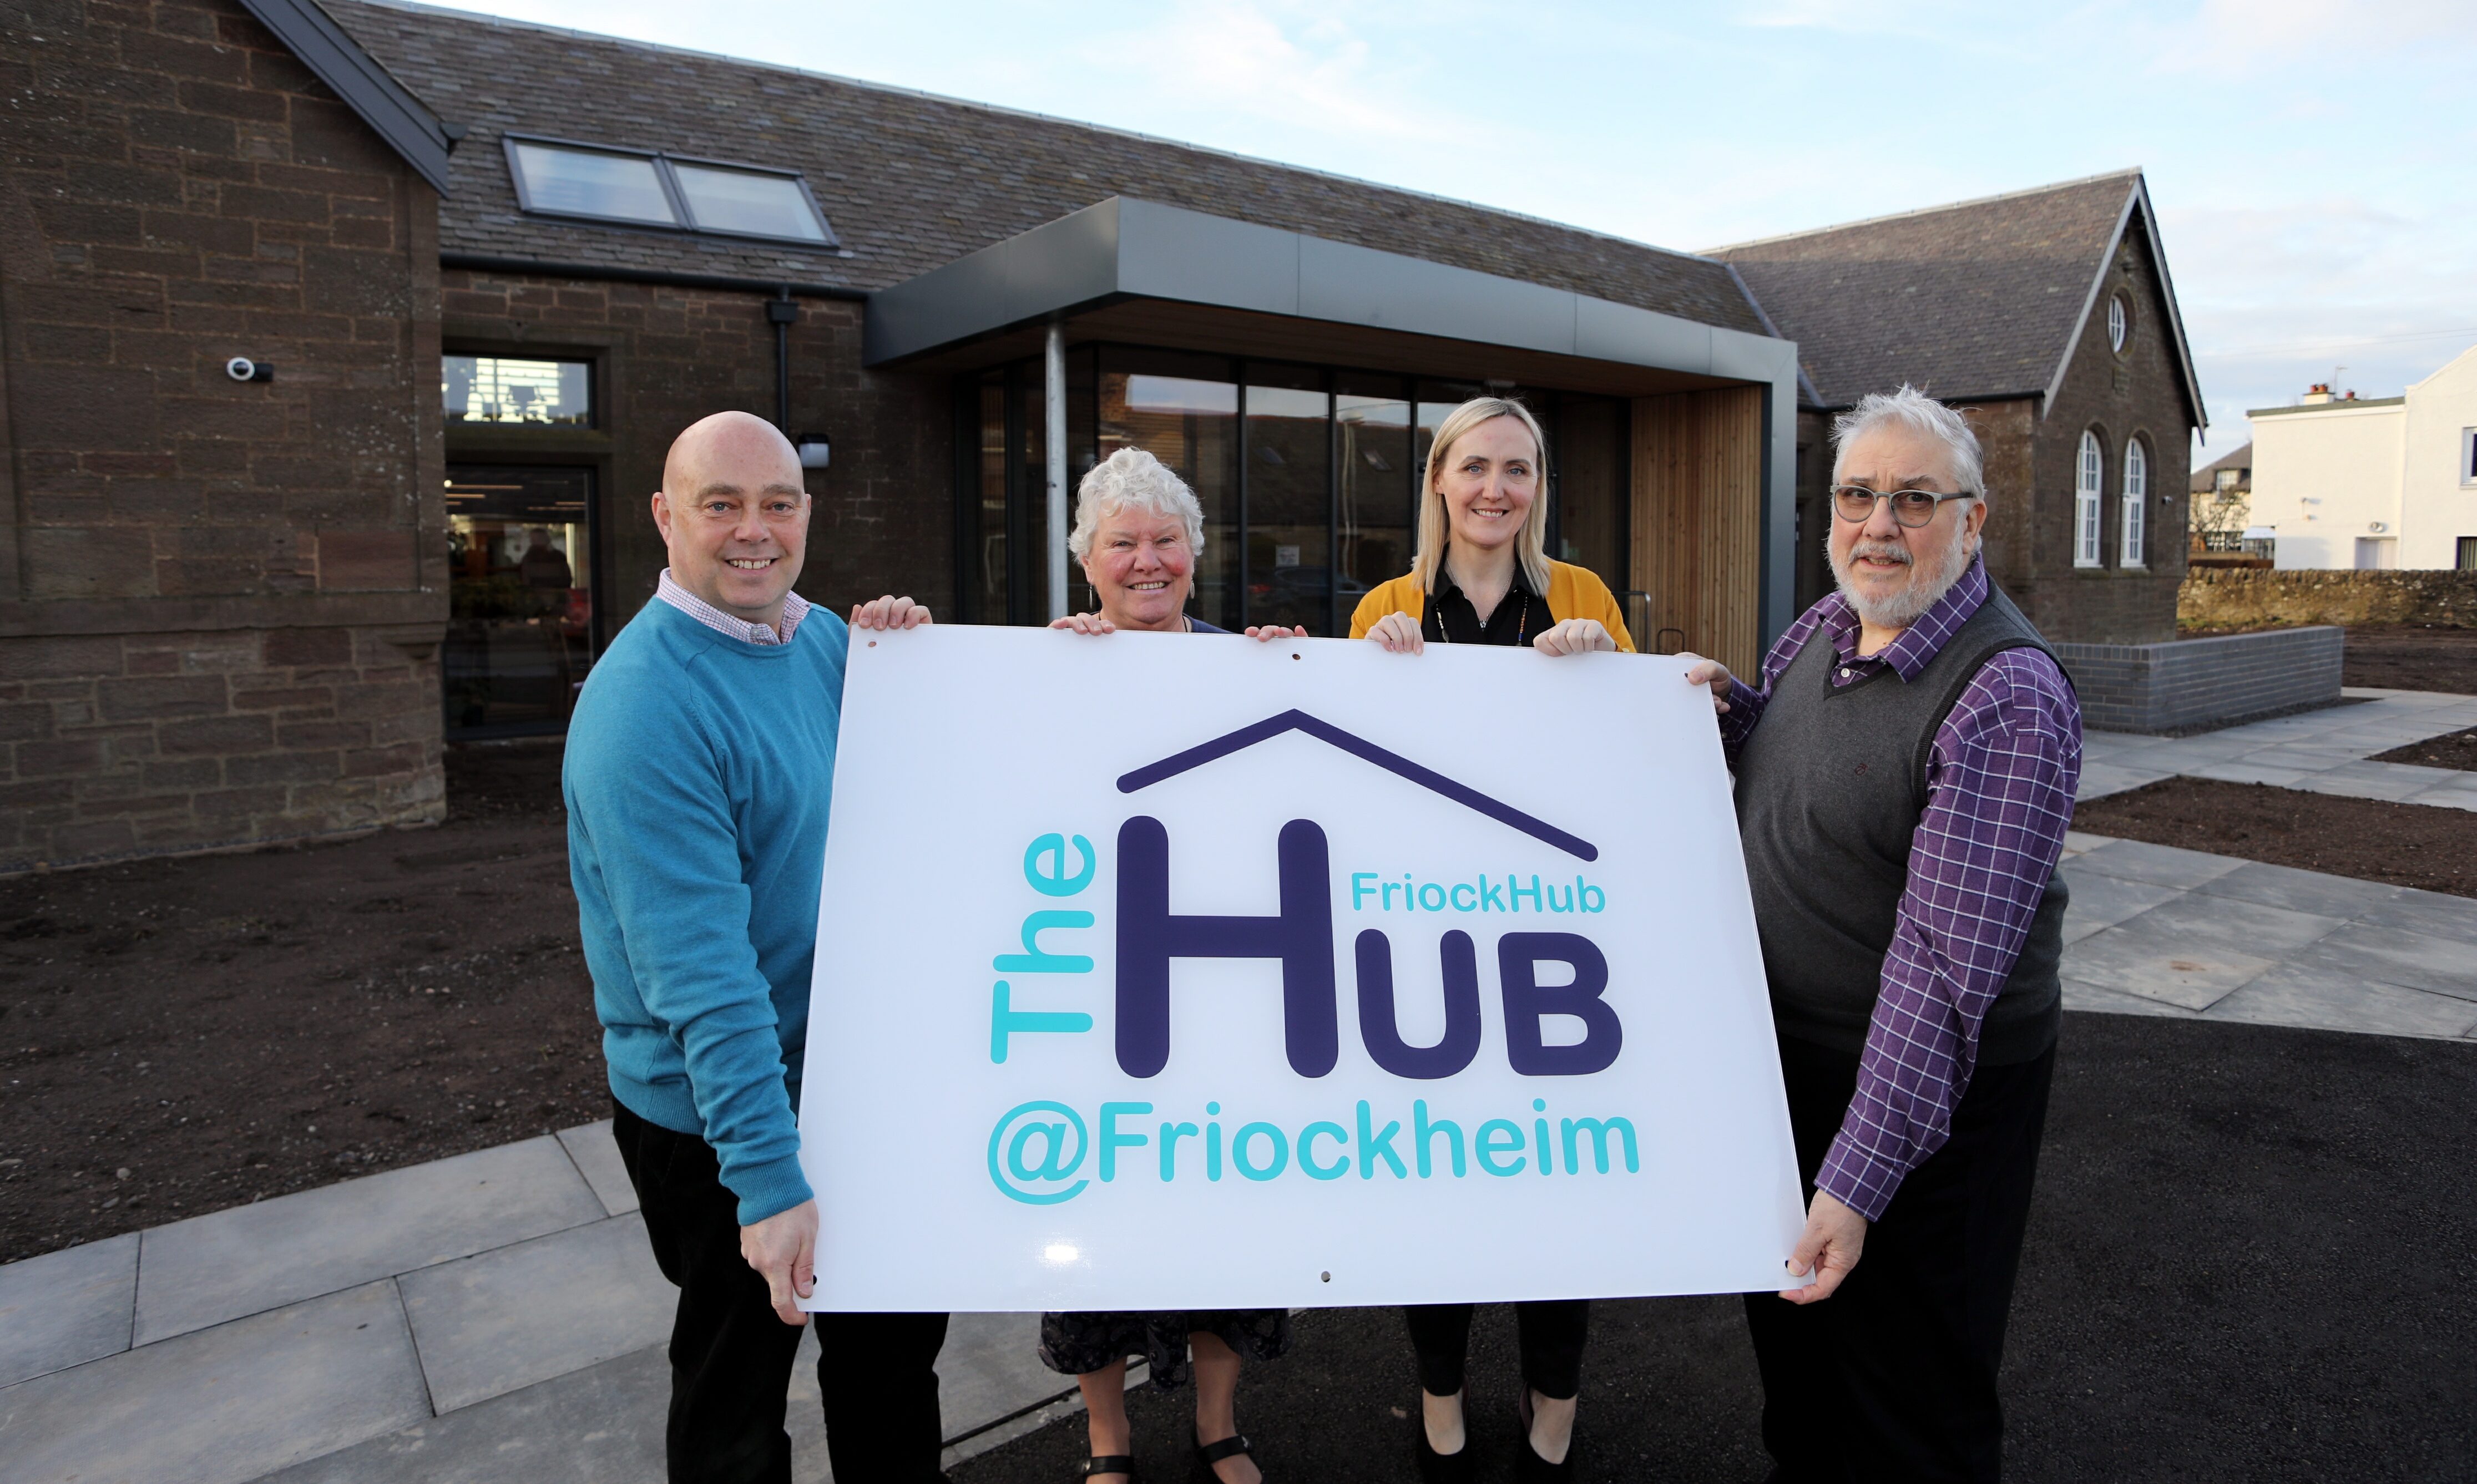 The new Friockheim Community Hub.